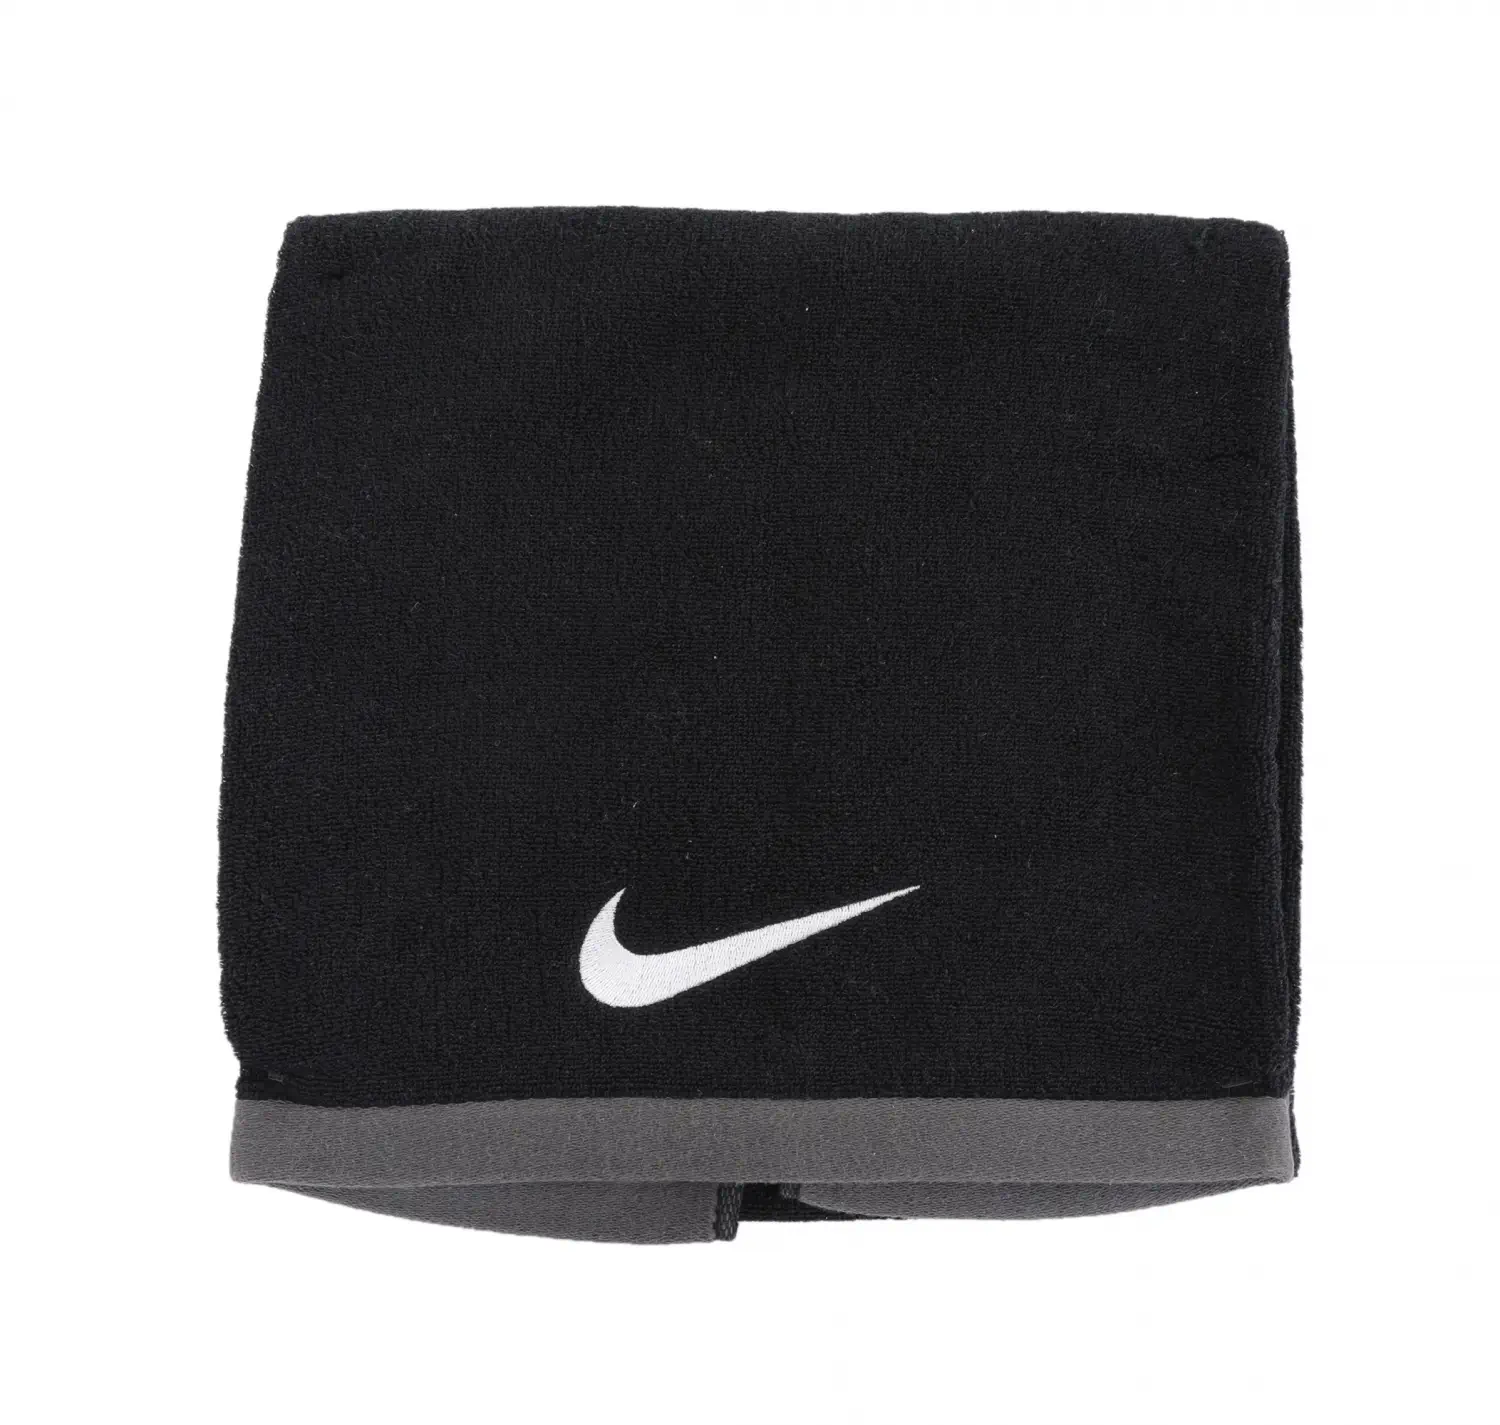 Nike Sport Towel Large Siyah/Antresit  L  Unisex Havlu - N.100.1929.046.LG